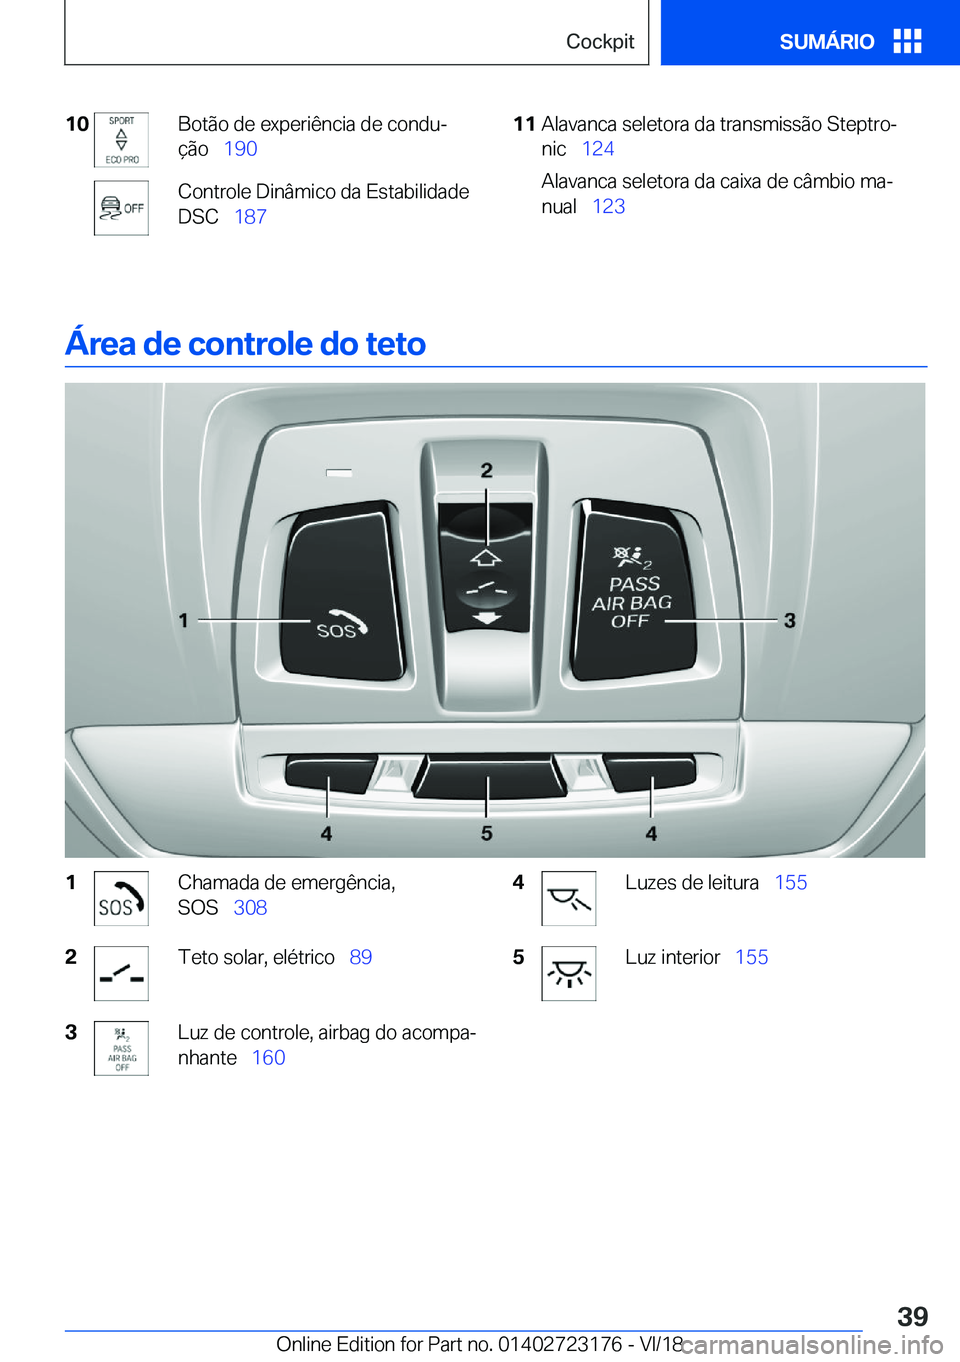 BMW 4 SERIES GRAN COUPE 2019  Manual do condutor (in Portuguese) �1�0�B�o�t�ã�o��d�e��e�x�p�e�r�i�ê�n�c�i�a��d�e��c�o�n�d�uª
�